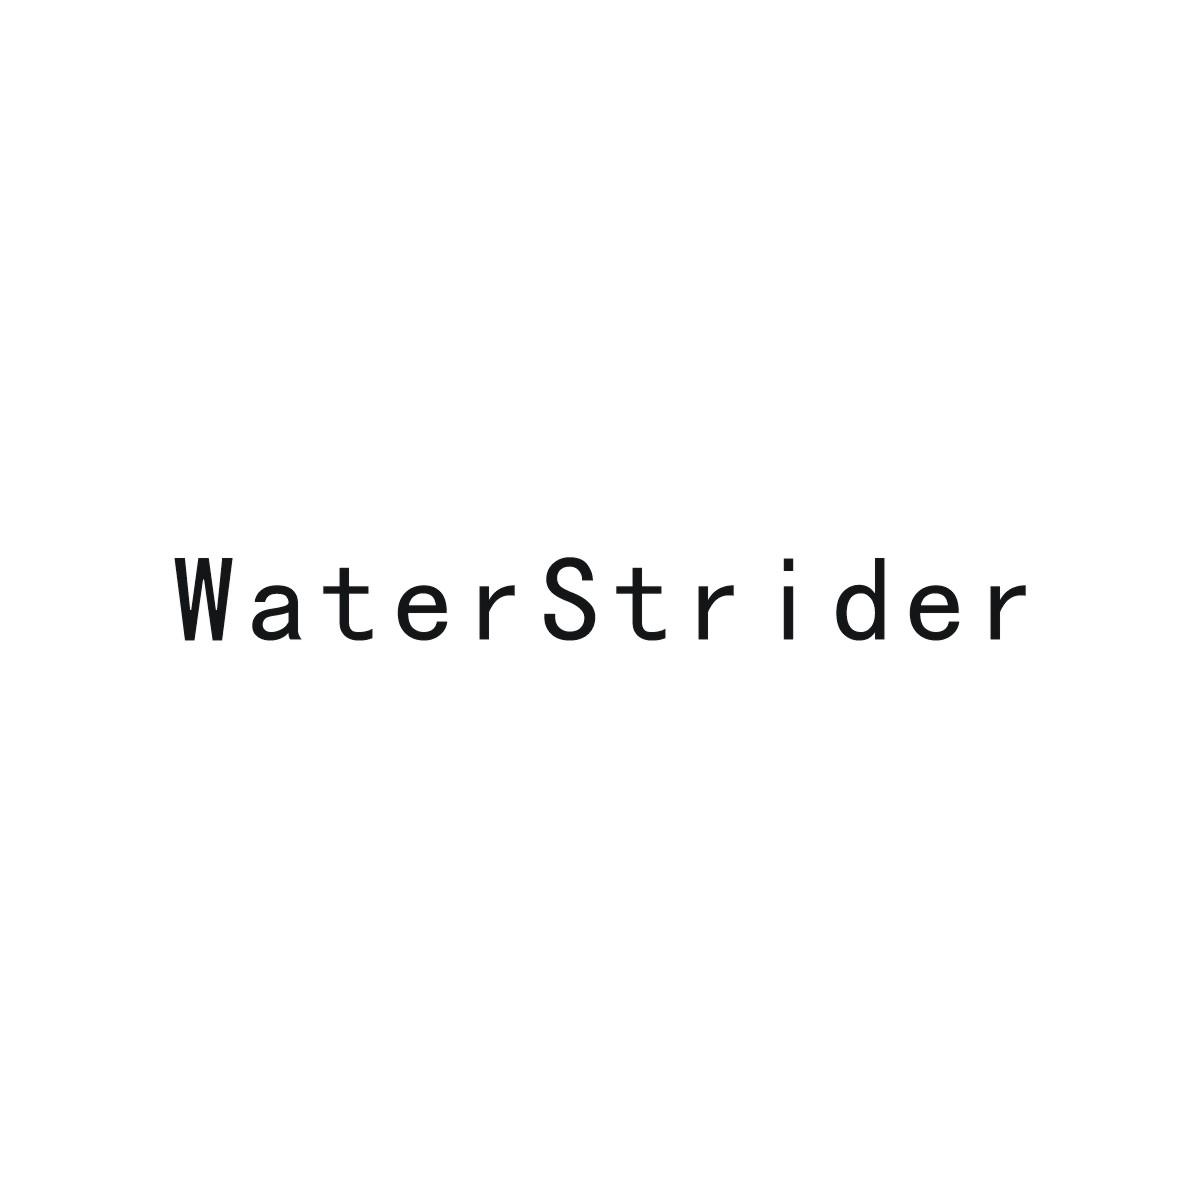 WATERSTRIDER运输用军车商标转让费用买卖交易流程